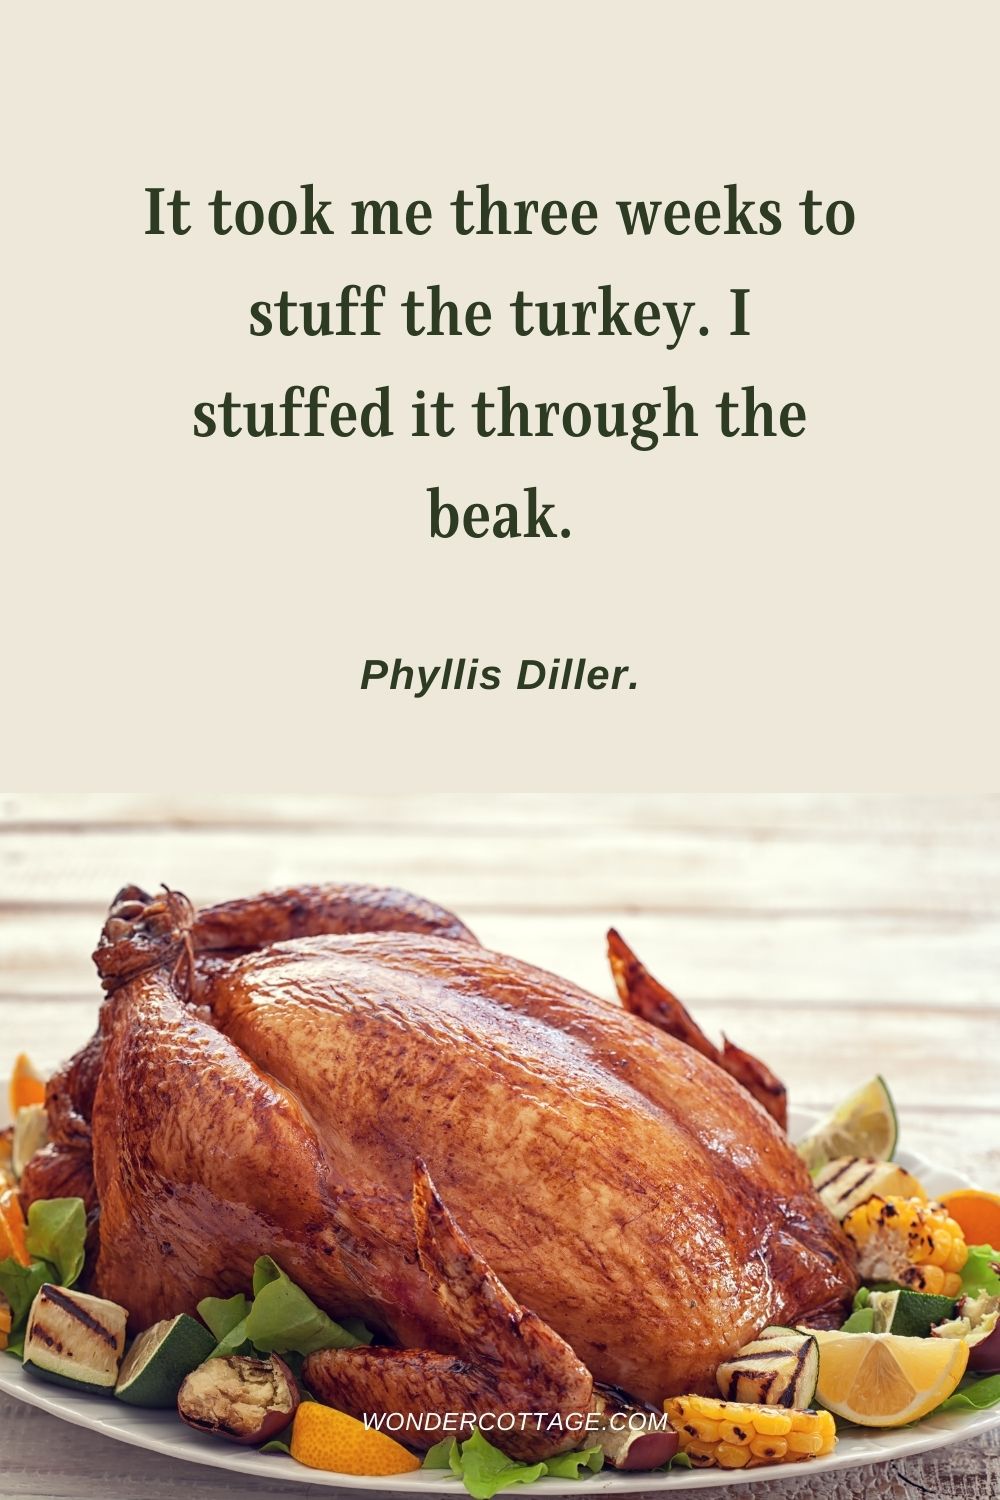 It took me three weeks to stuff the turkey. I stuffed it through the beak. Phyllis Diller.